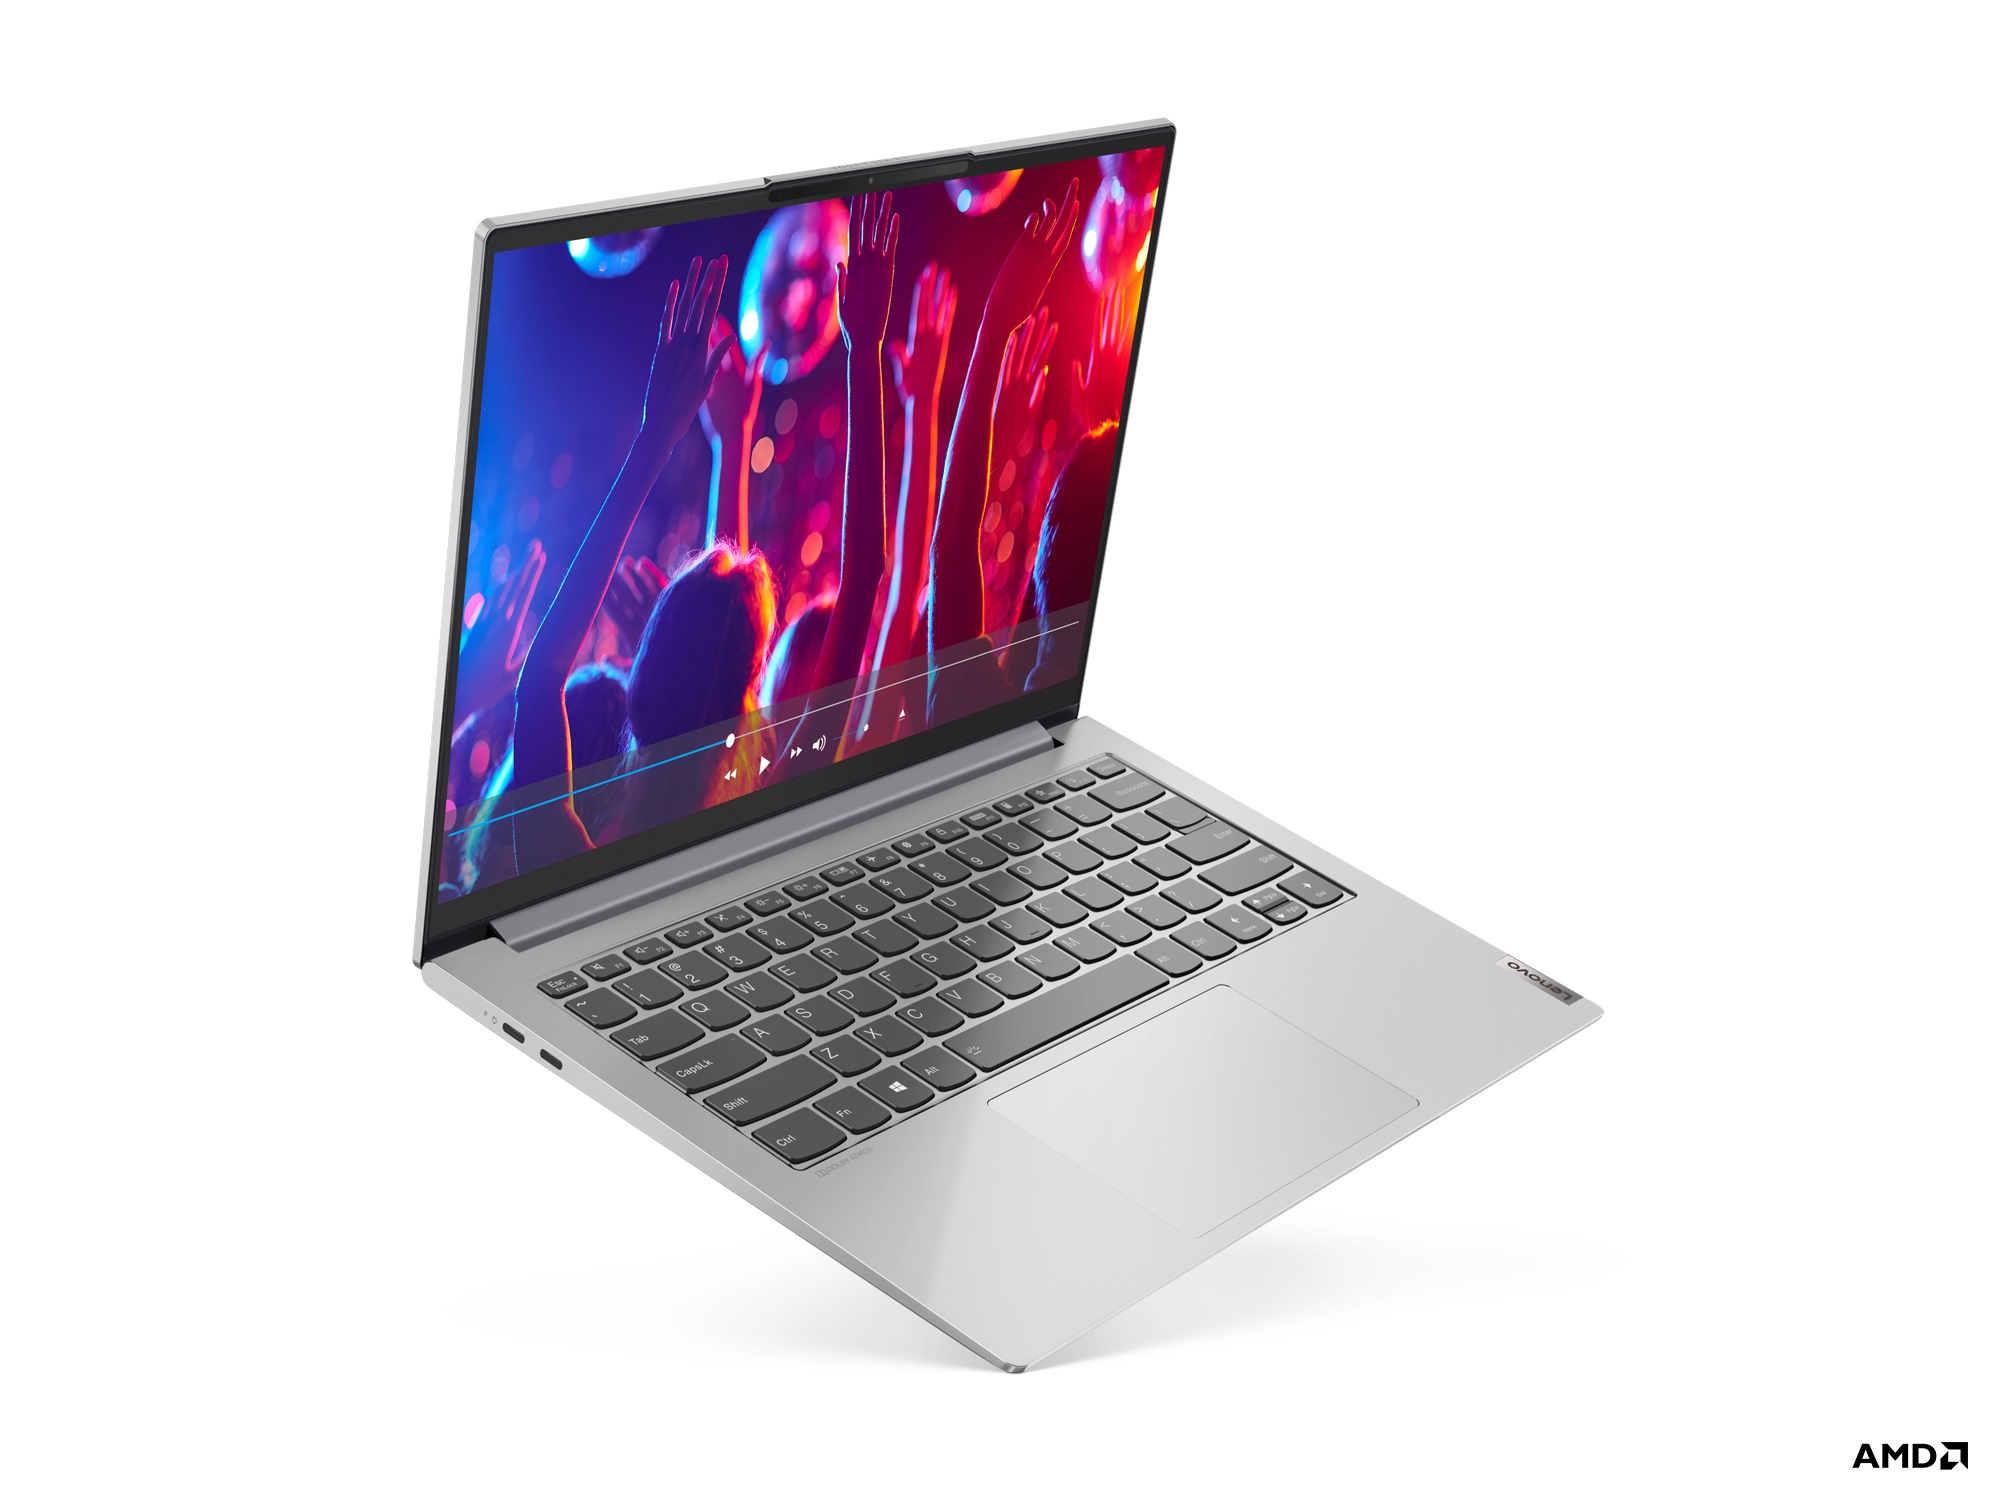 Lenovo introduces new Yoga consumer laptops running Windows 10 f52ea530efd0d4527eb116b17bd250a5.jpg